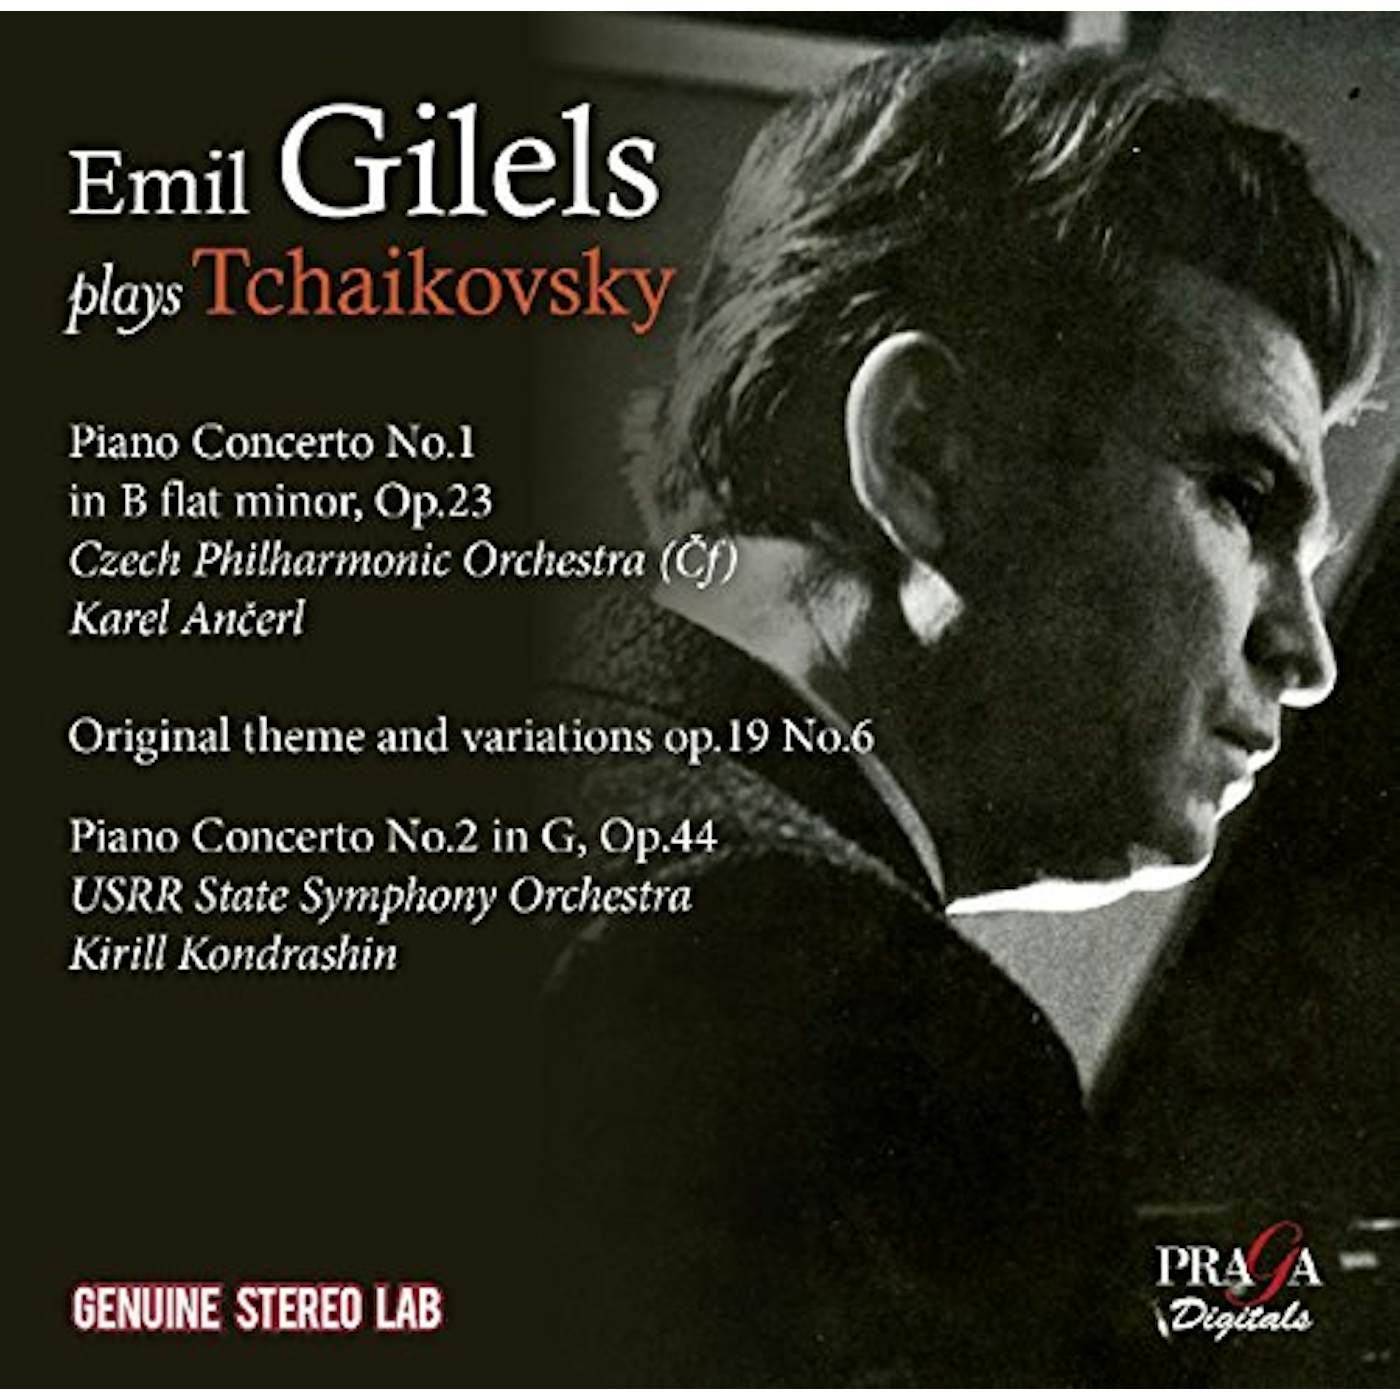 EMIL GILELS PLAYS TCHAIKOVSKY CD